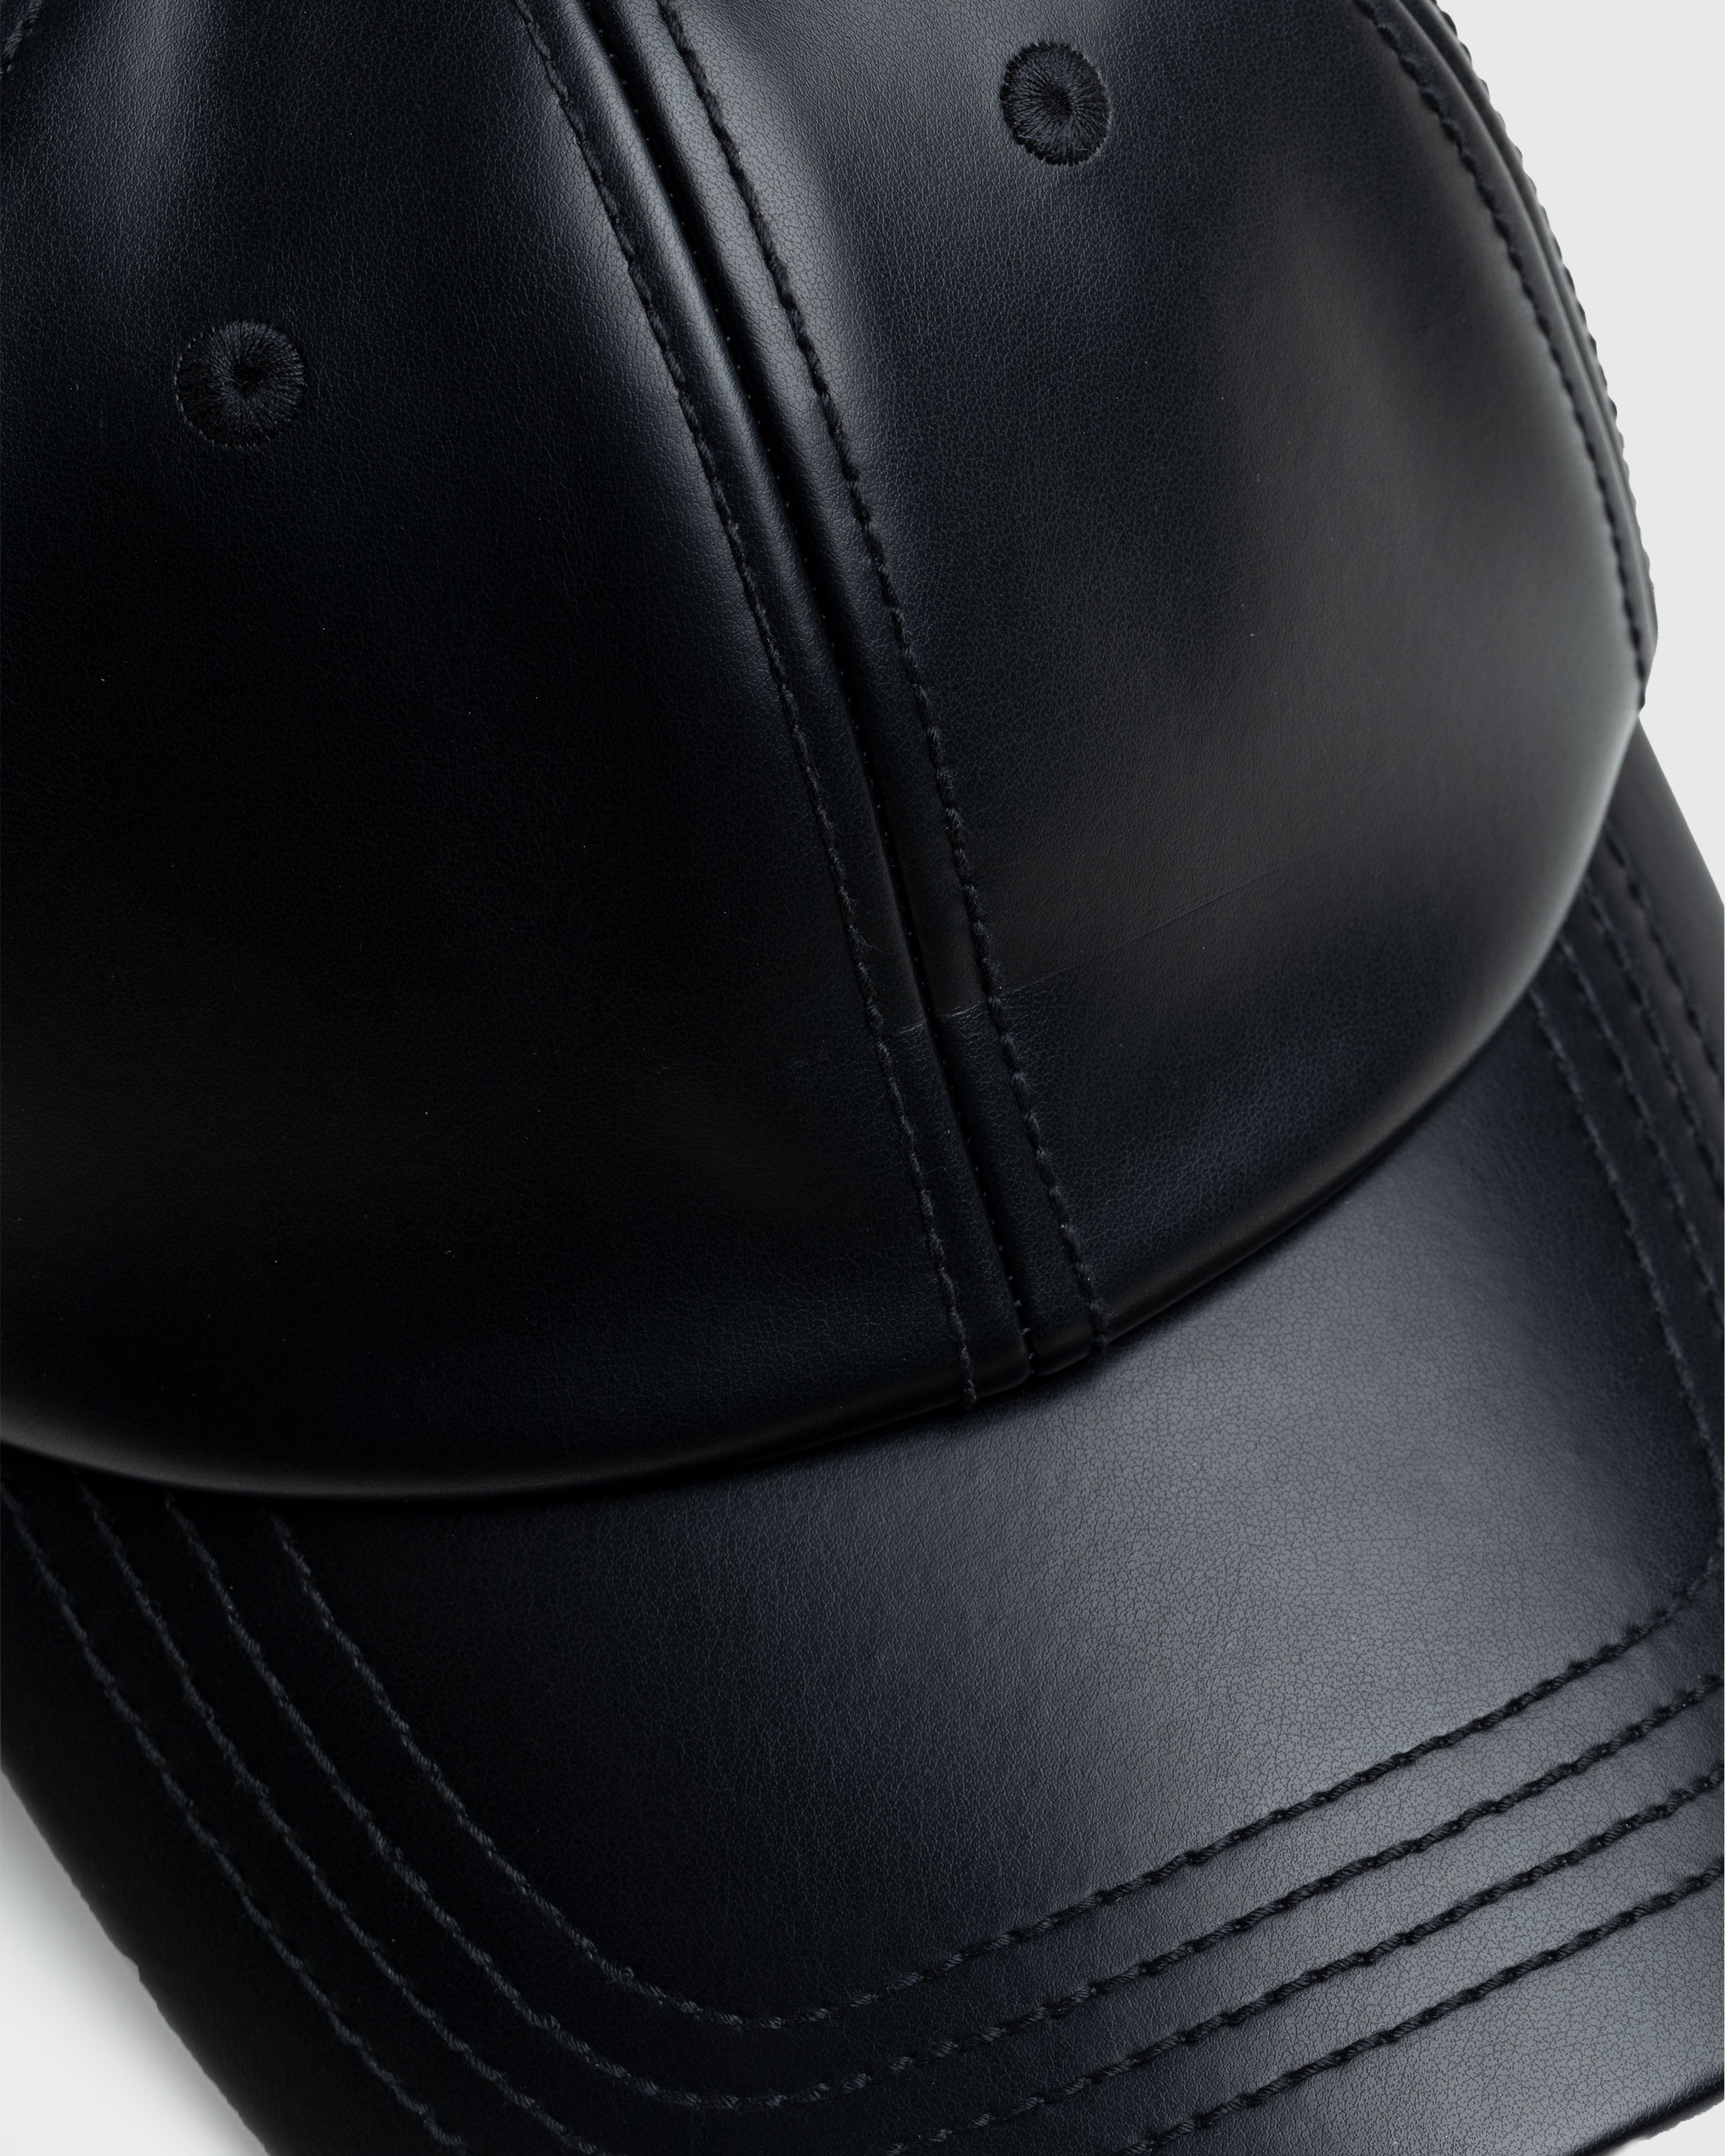 Acne Studios - Baseball Cap Black - Accessories - Black - Image 4